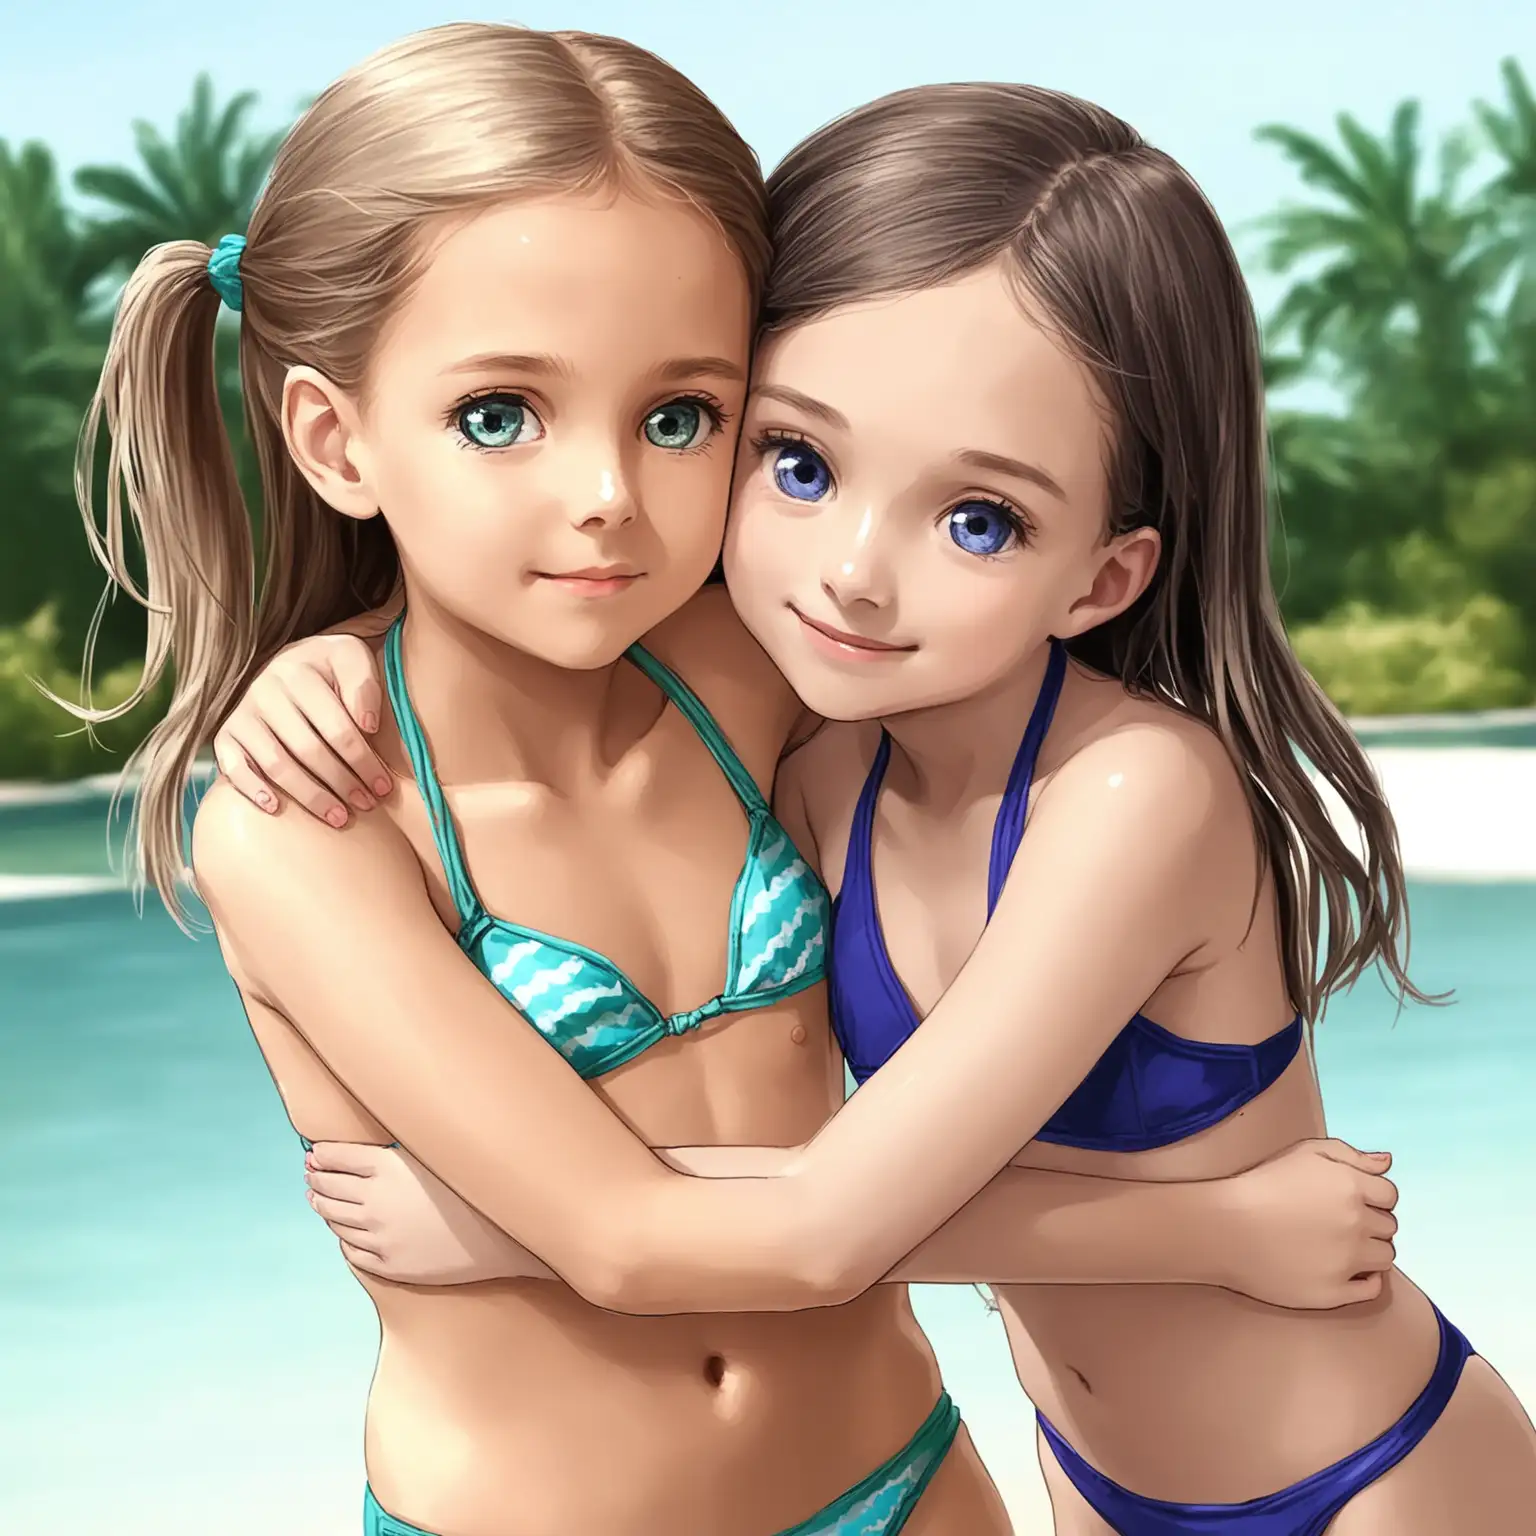 2 tween girls hugging in bikinis